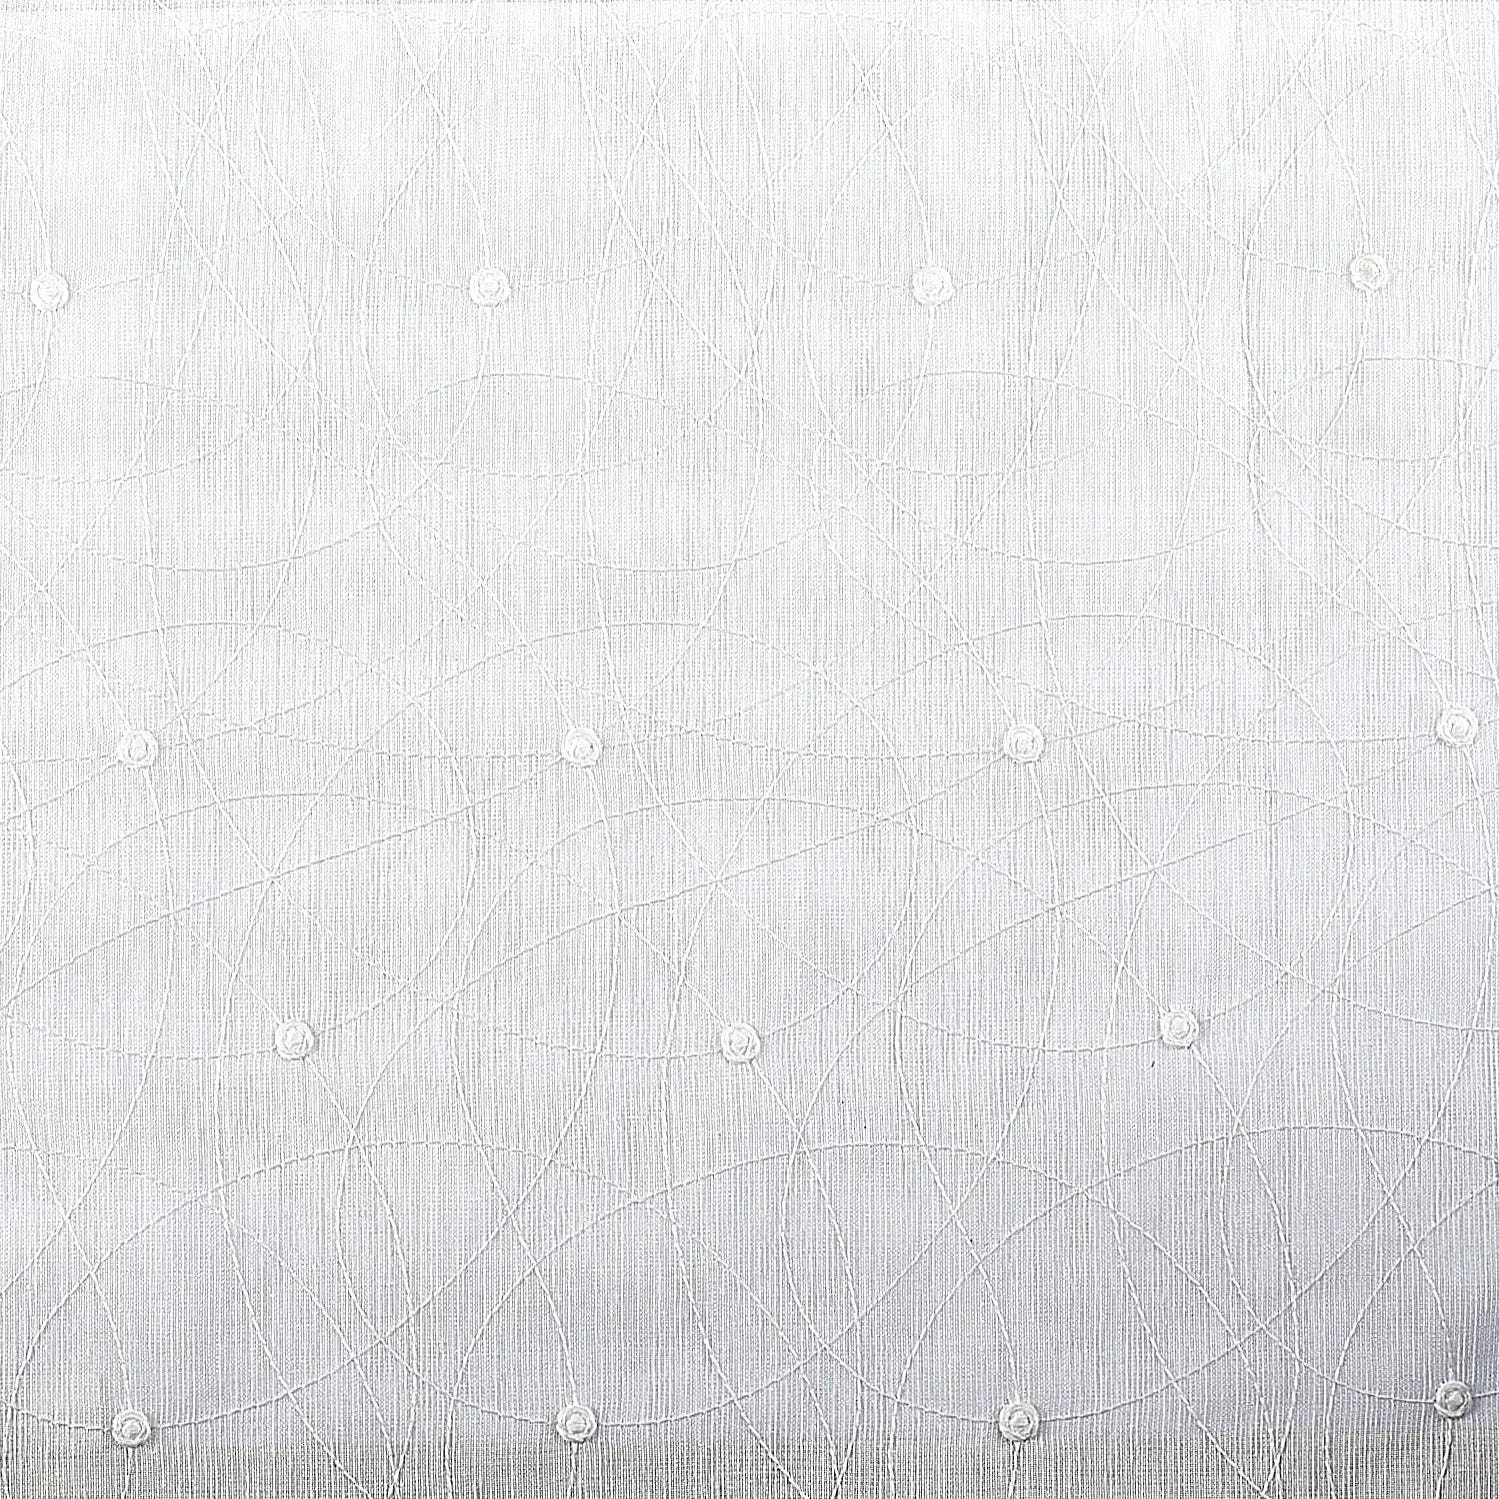 Cinta dobladillo adhesiva blanco de 0,038x300 cm